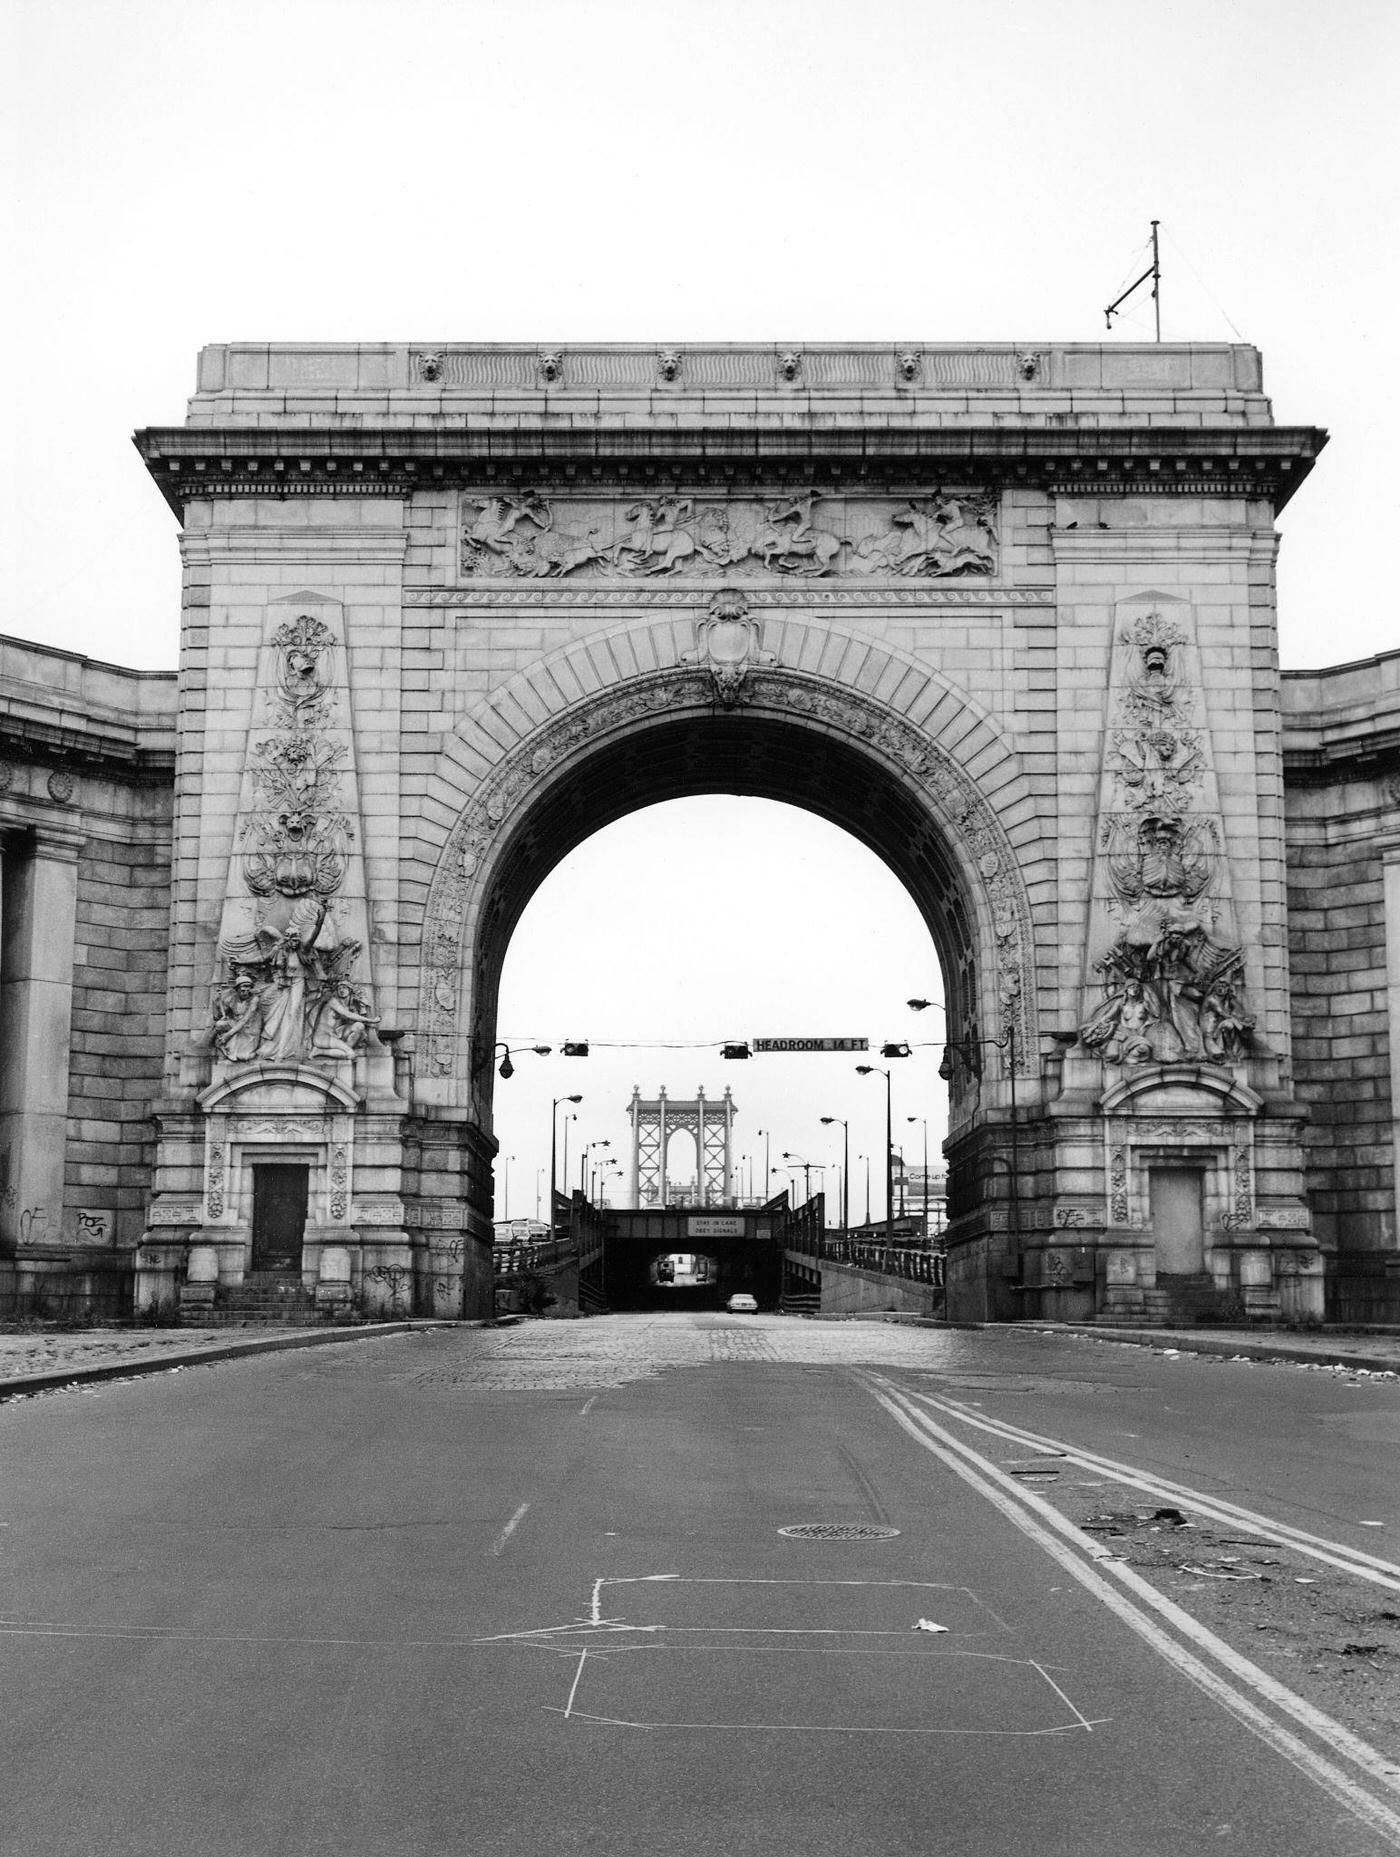 Manhattan Bridge Entrance, Through The Ornate Archway, New York City, 1989